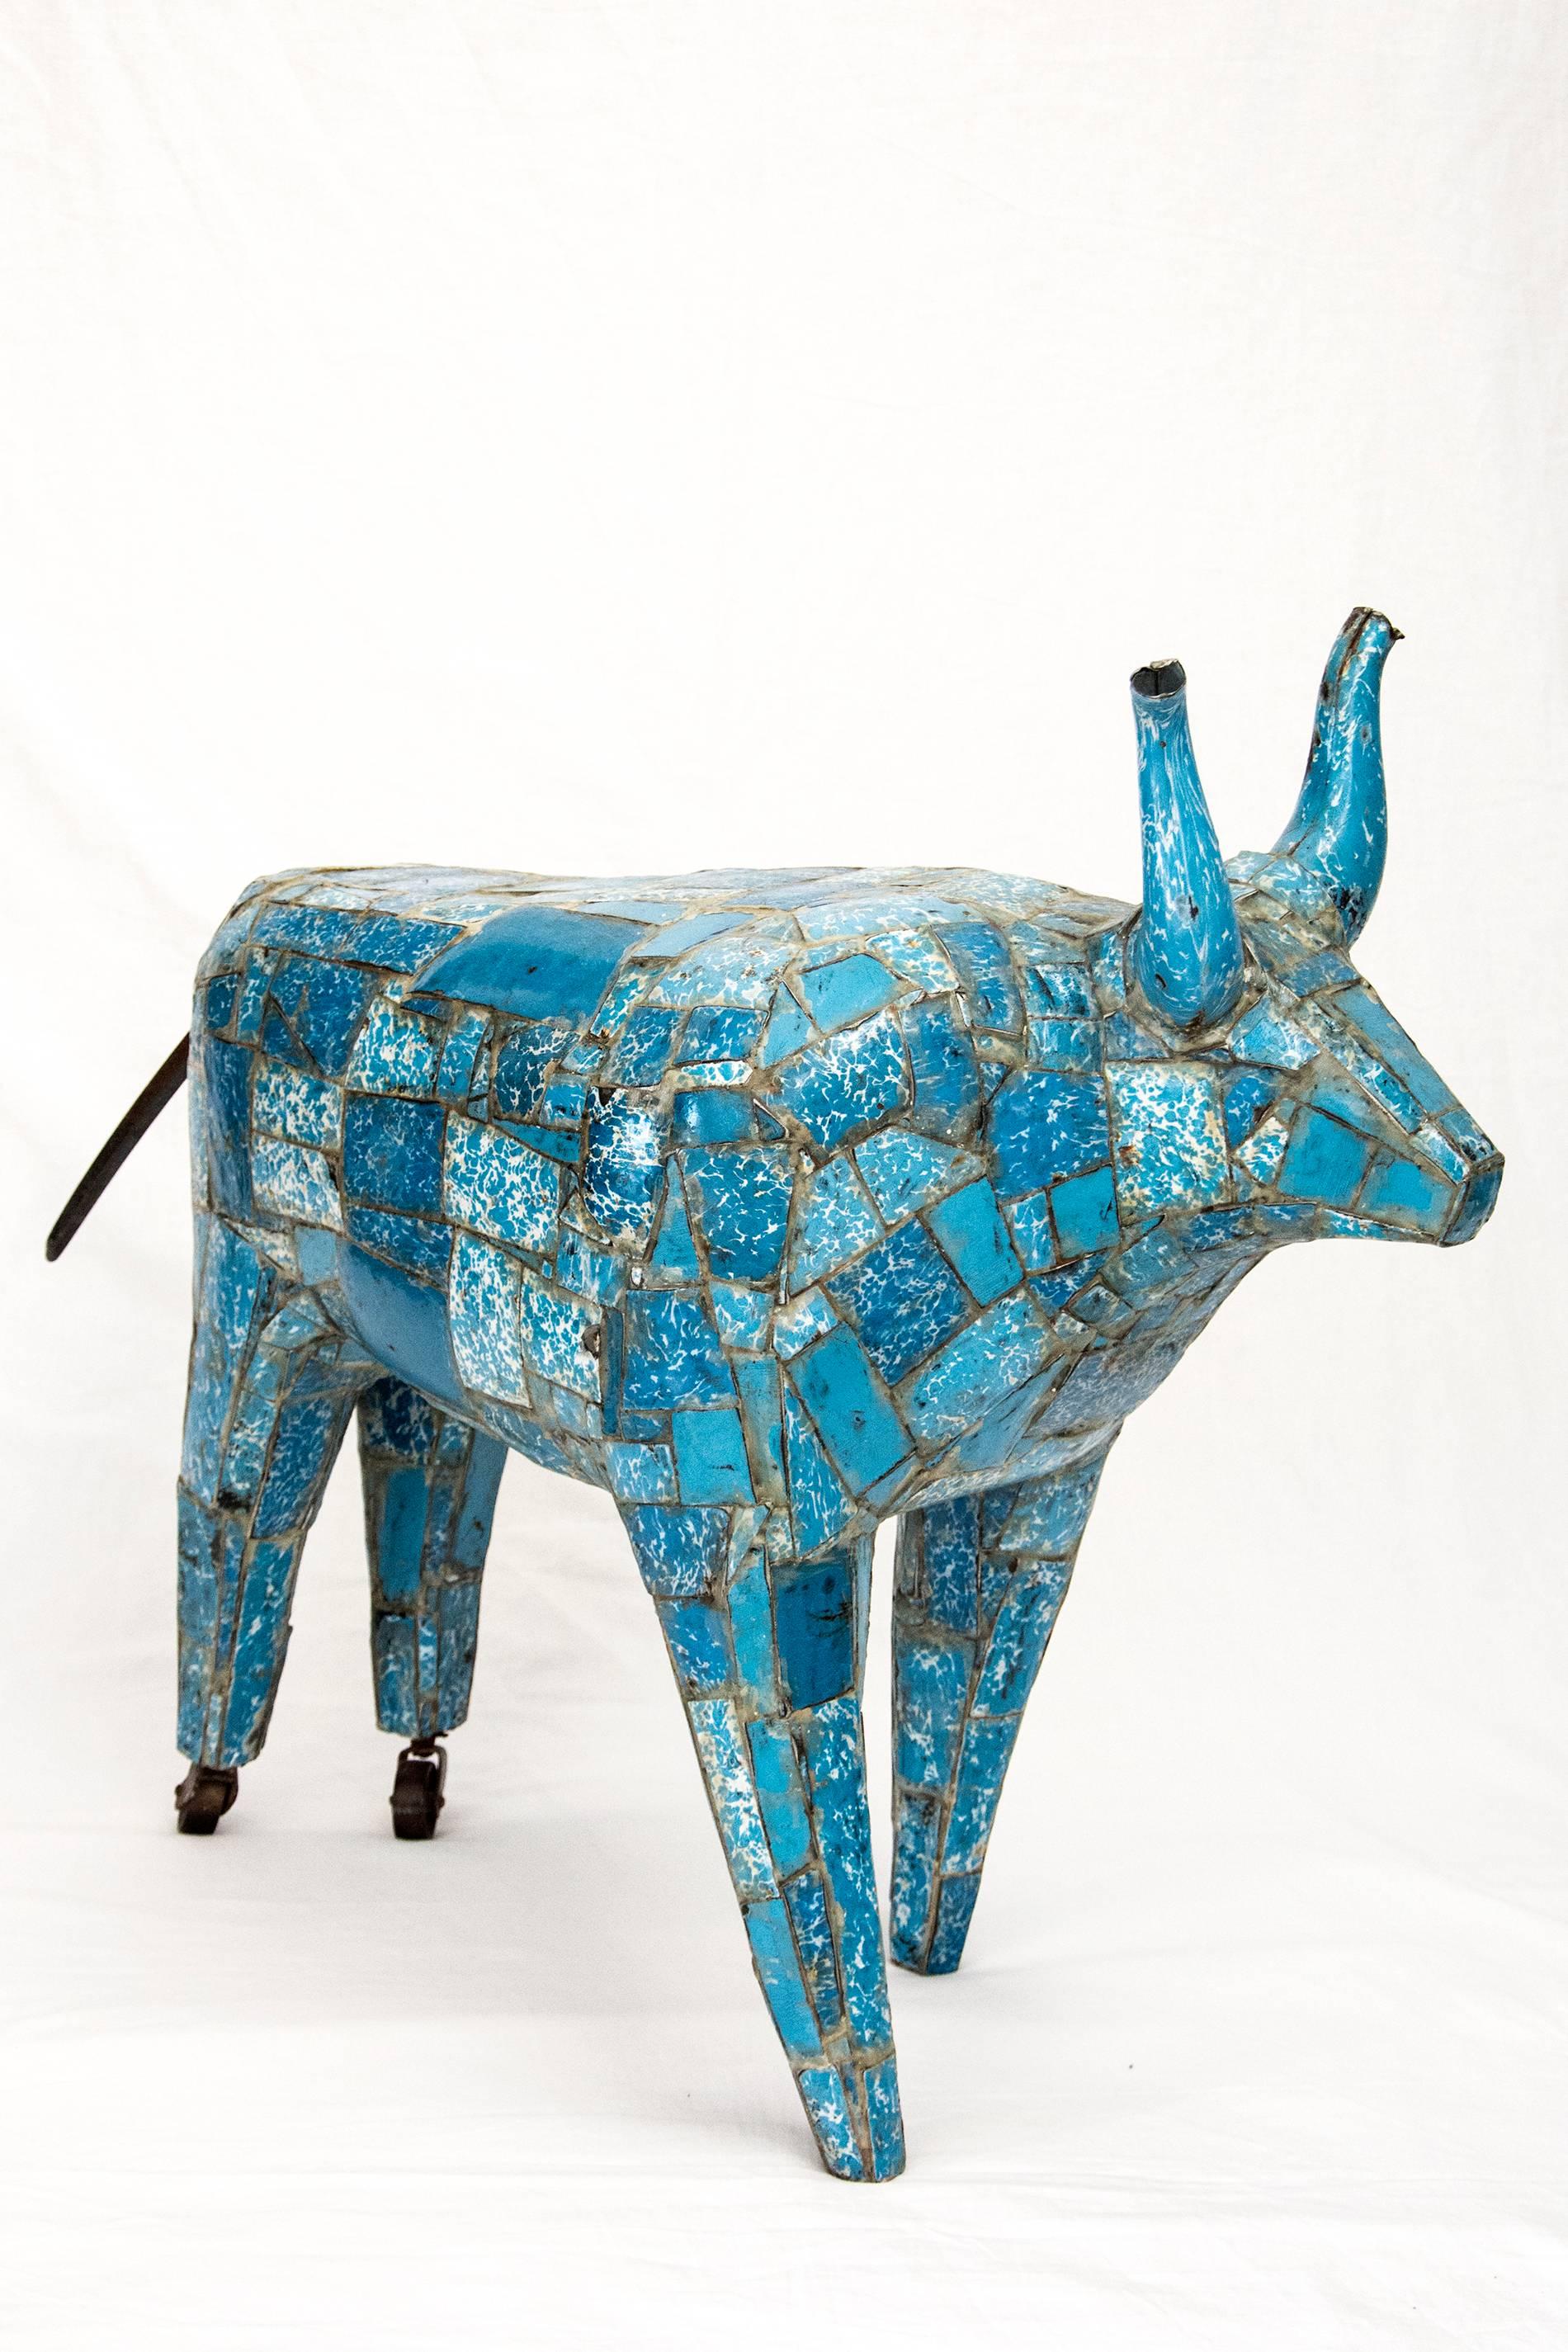 Big Blue Bull - charming, figurative, re-purposed blue enamel sculpture - Sculpture by Susan Valyi